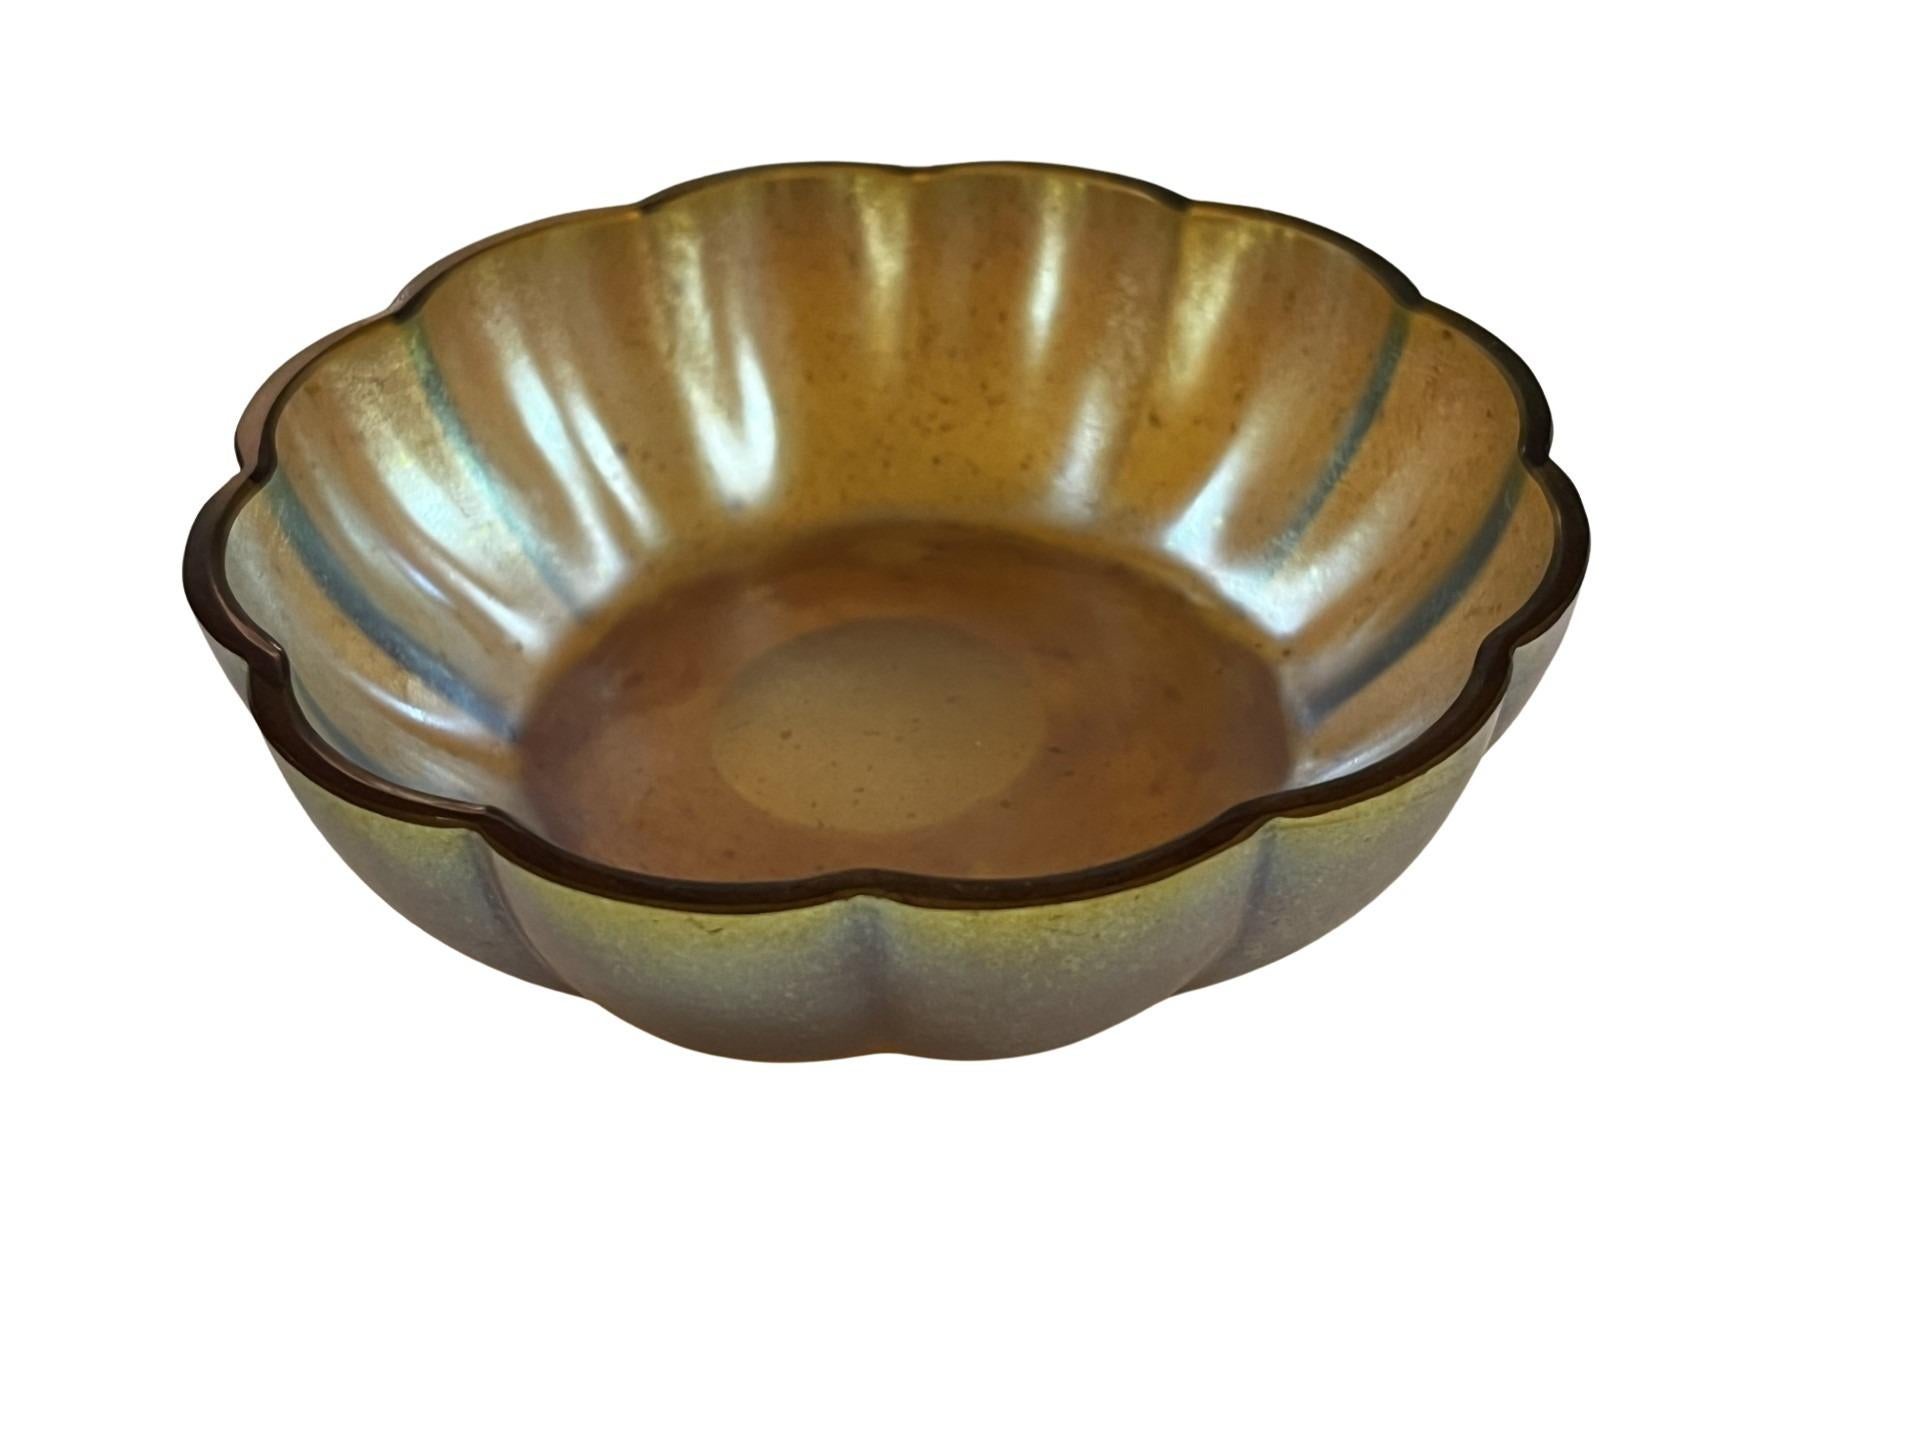 Hand-Crafted Fascinating bowl, iridiscent, WMF Myra glass, Lötz like, 1920s Art Deco Germany